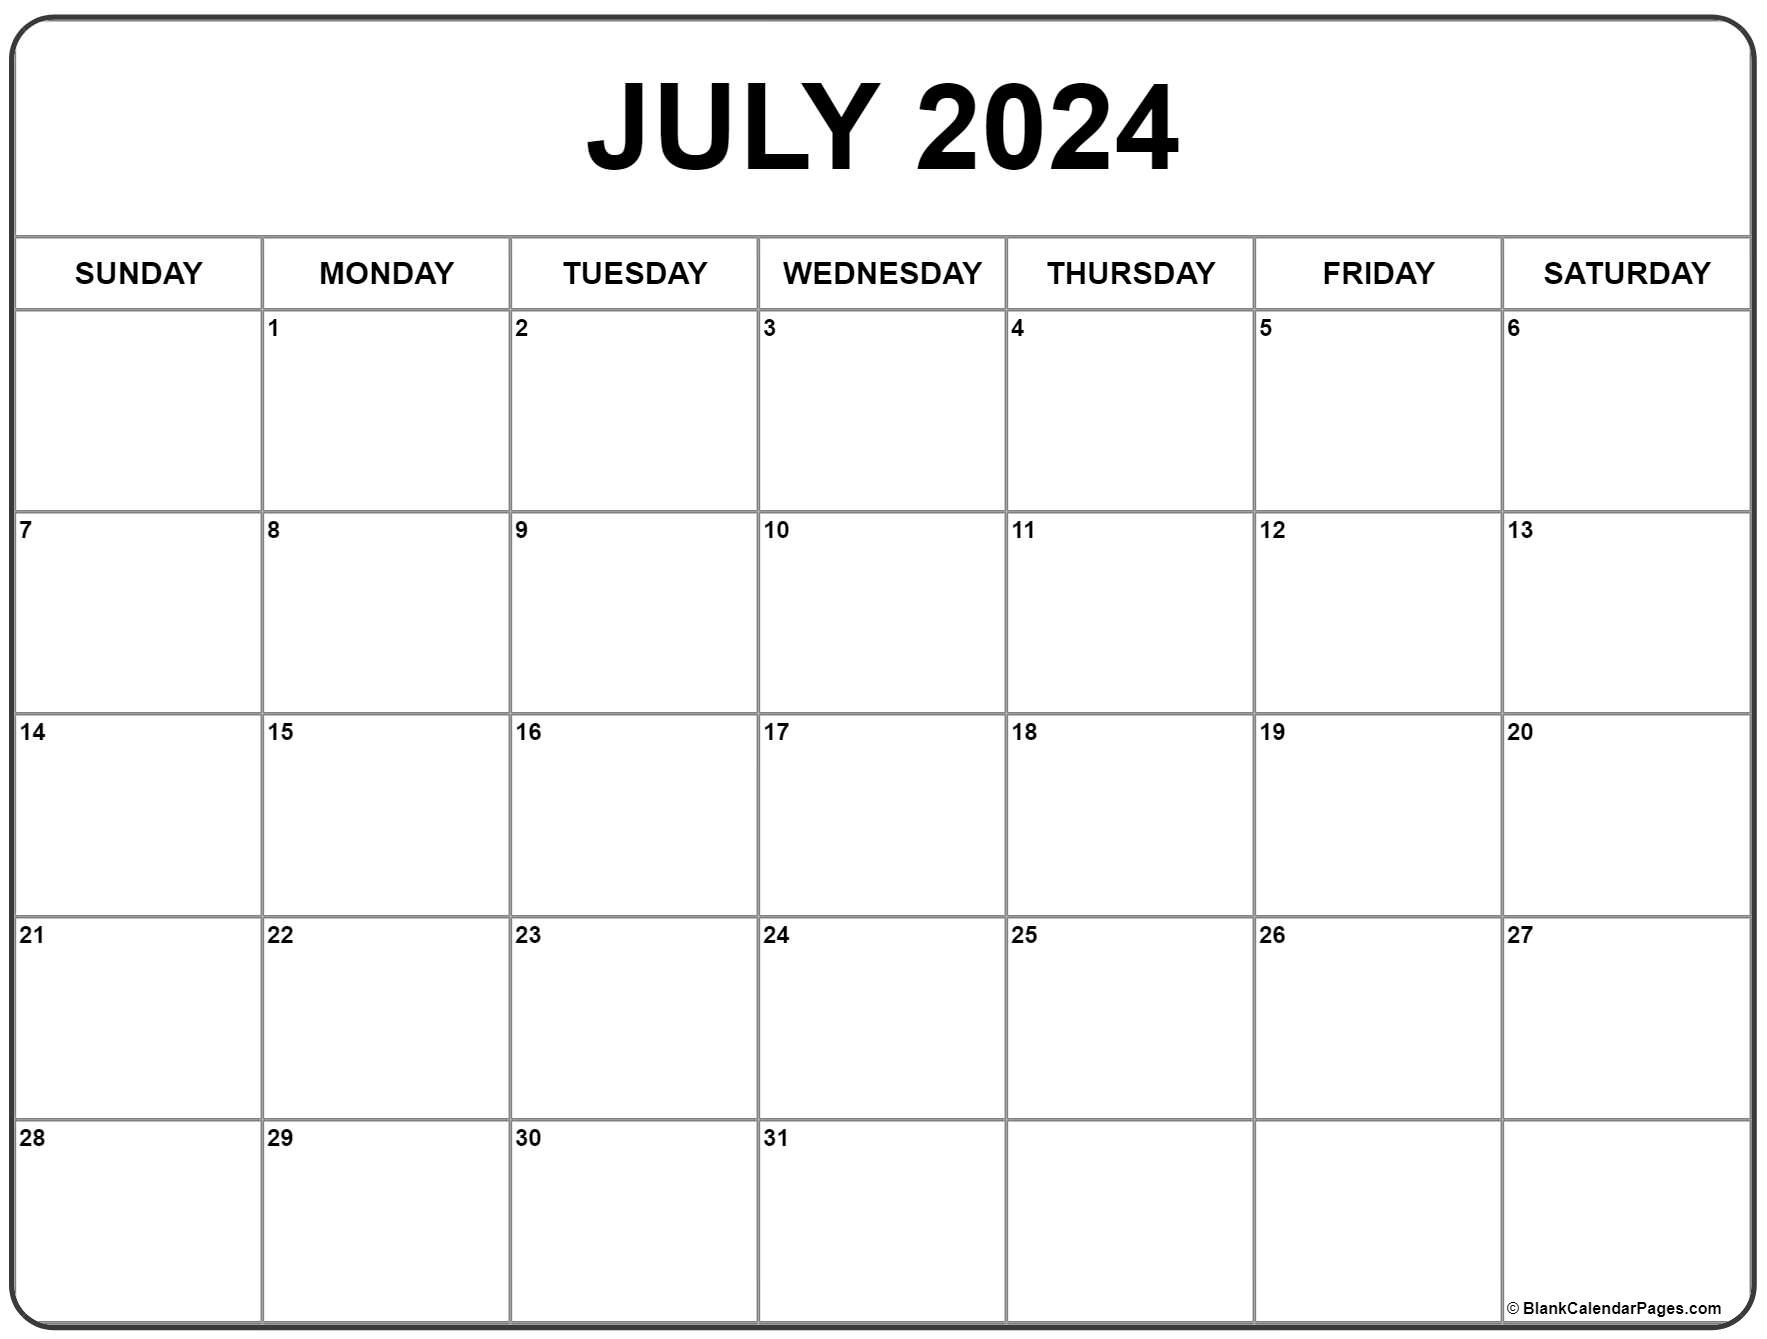 July 2024 Calendar | Free Printable Calendar for June/July 2024 Printable Calendar